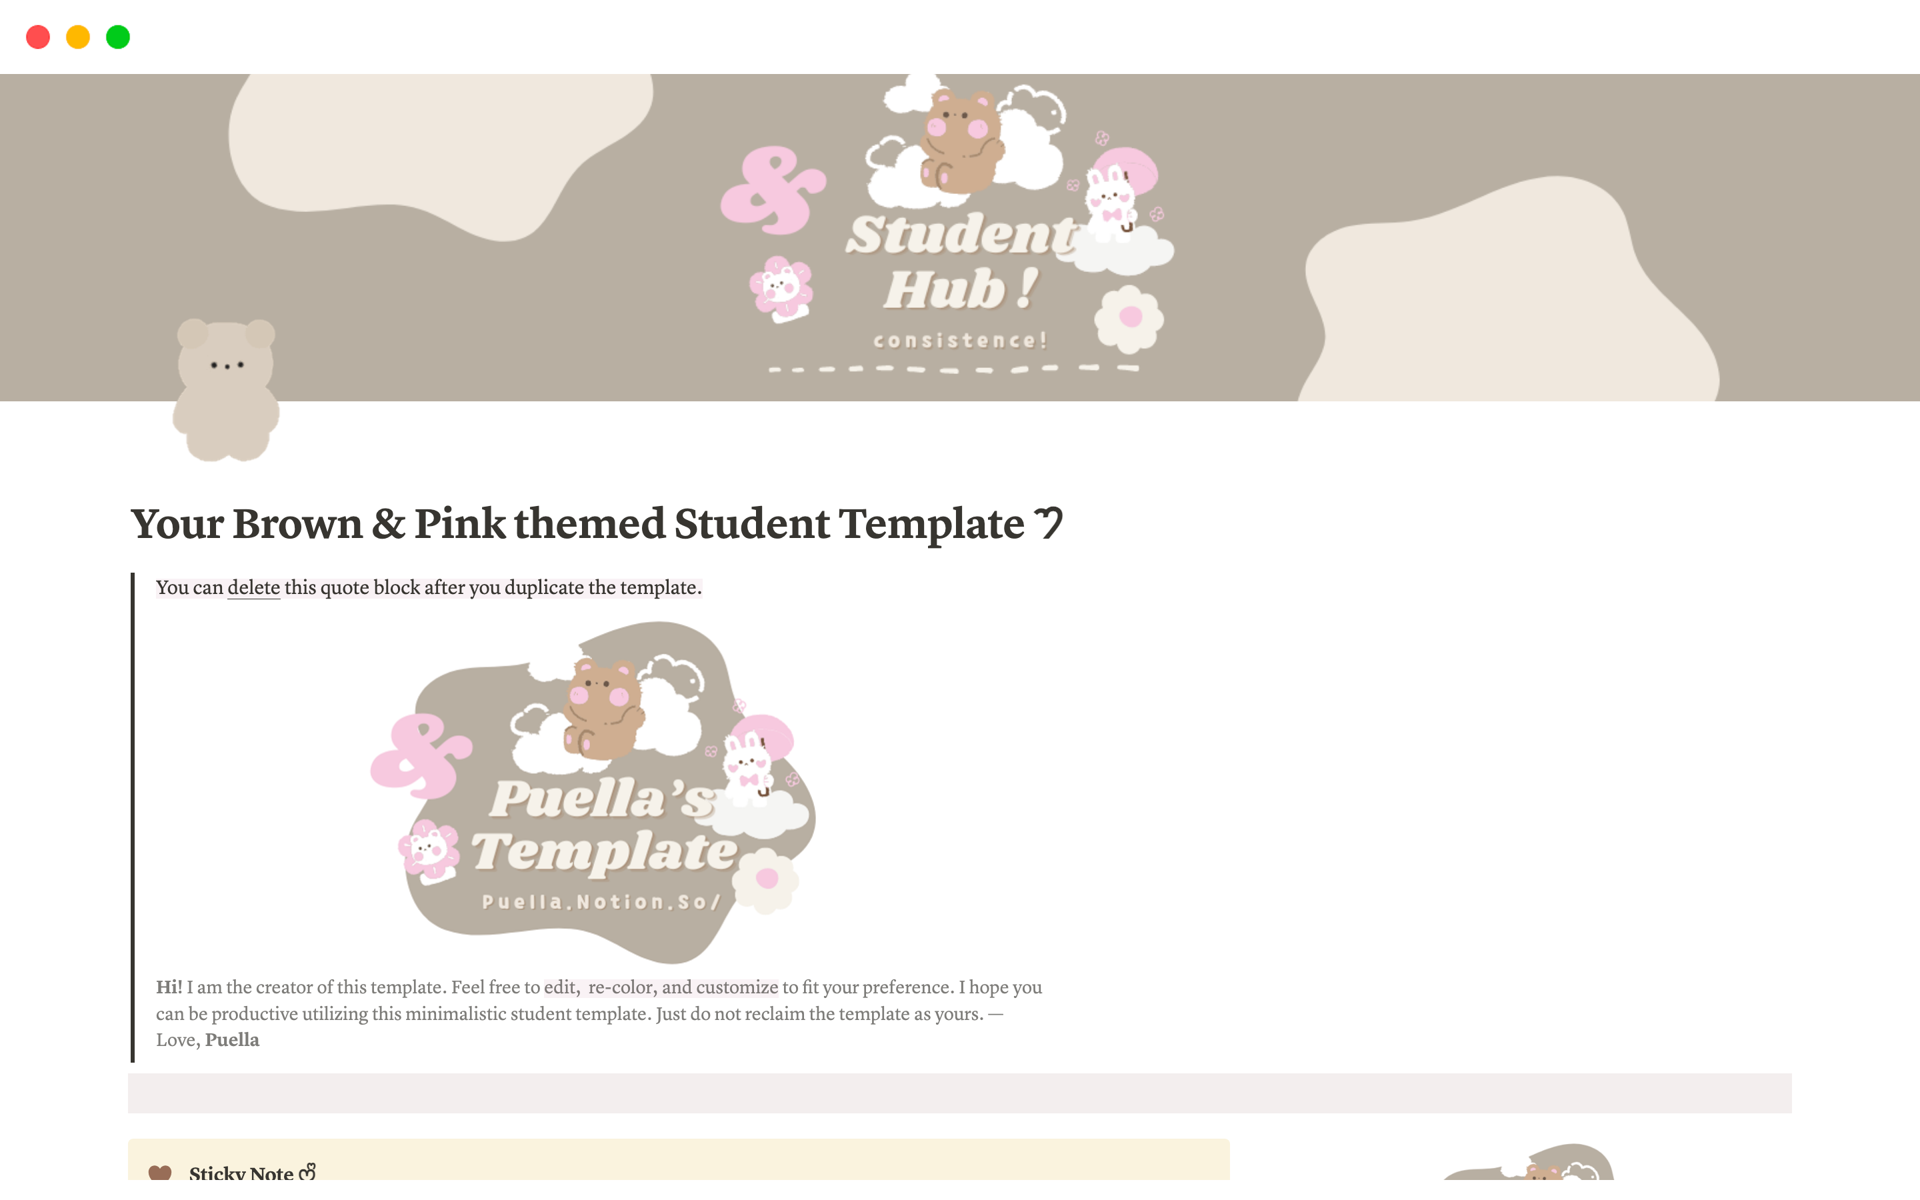 Brown & Pink themed Student Template님의 템플릿 미리보기